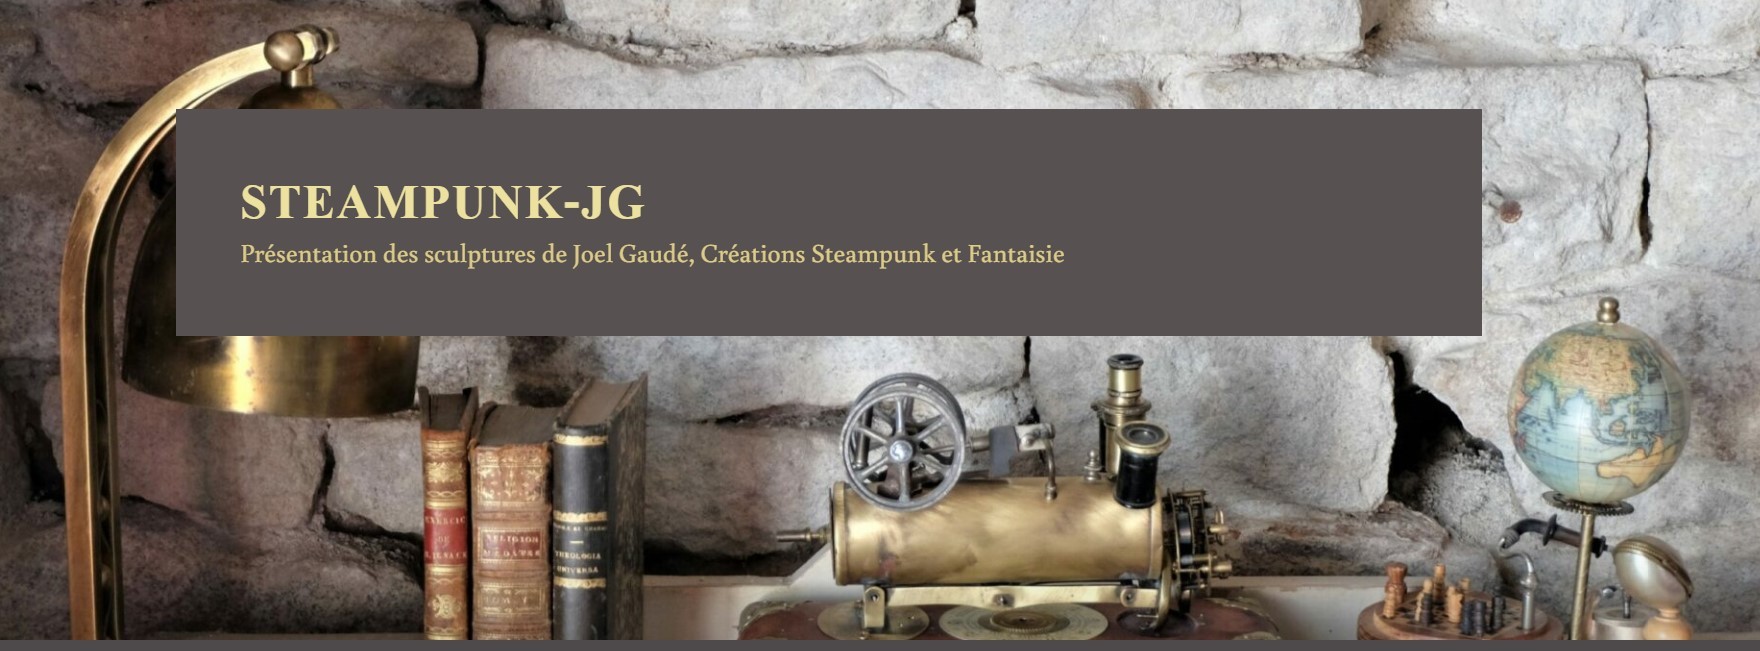  steampunk -jg créations JG Joel Gaude